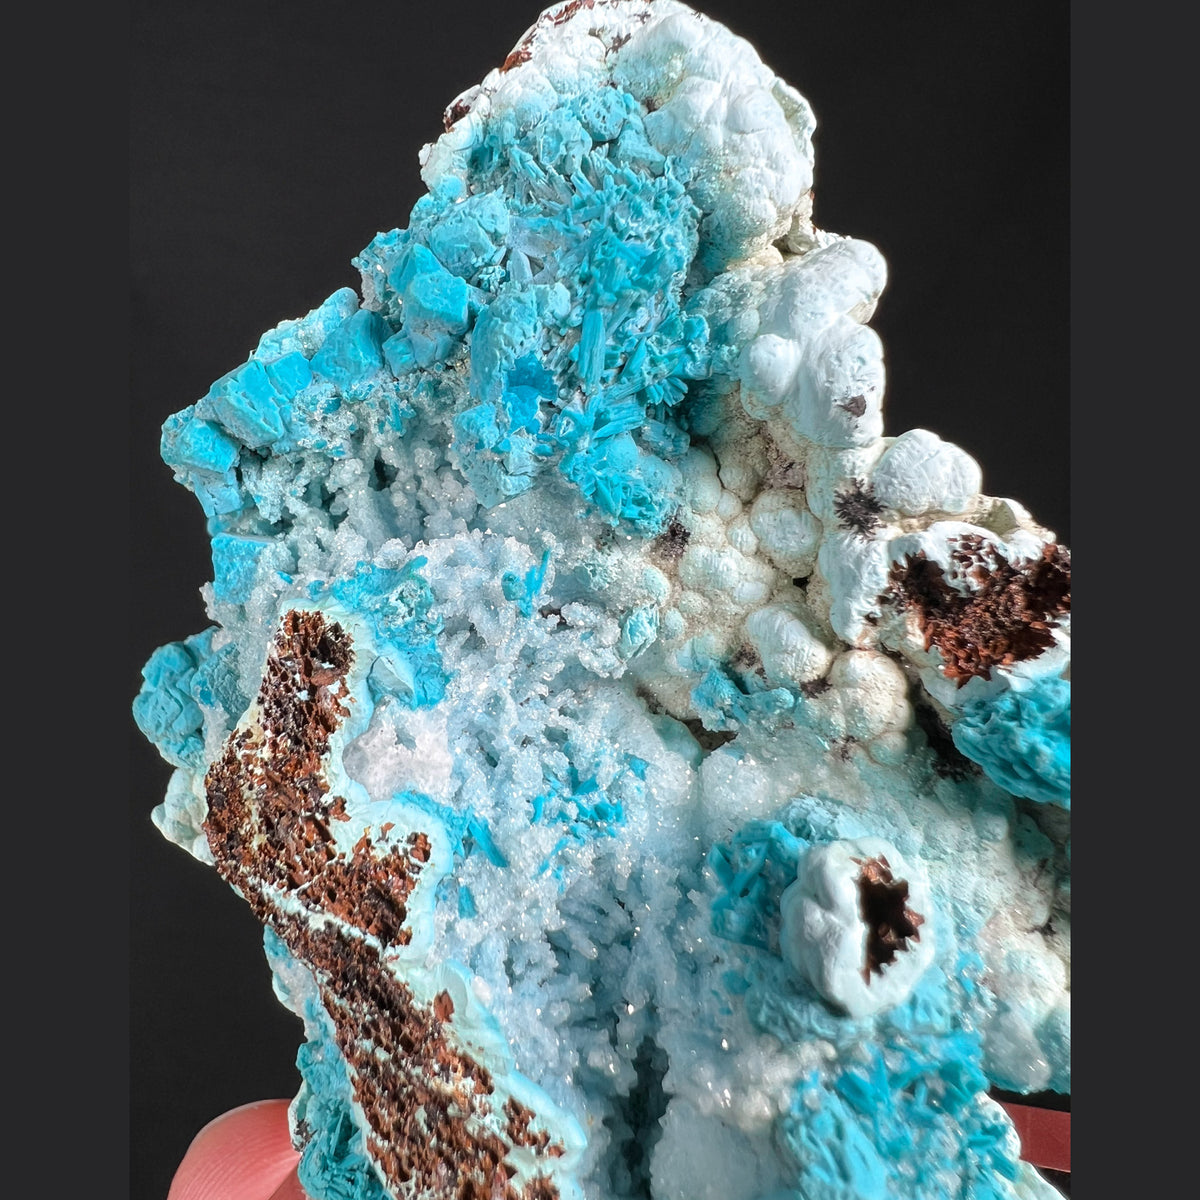 Chrysocolla, Dolomite and Drusy Quartz Crystals